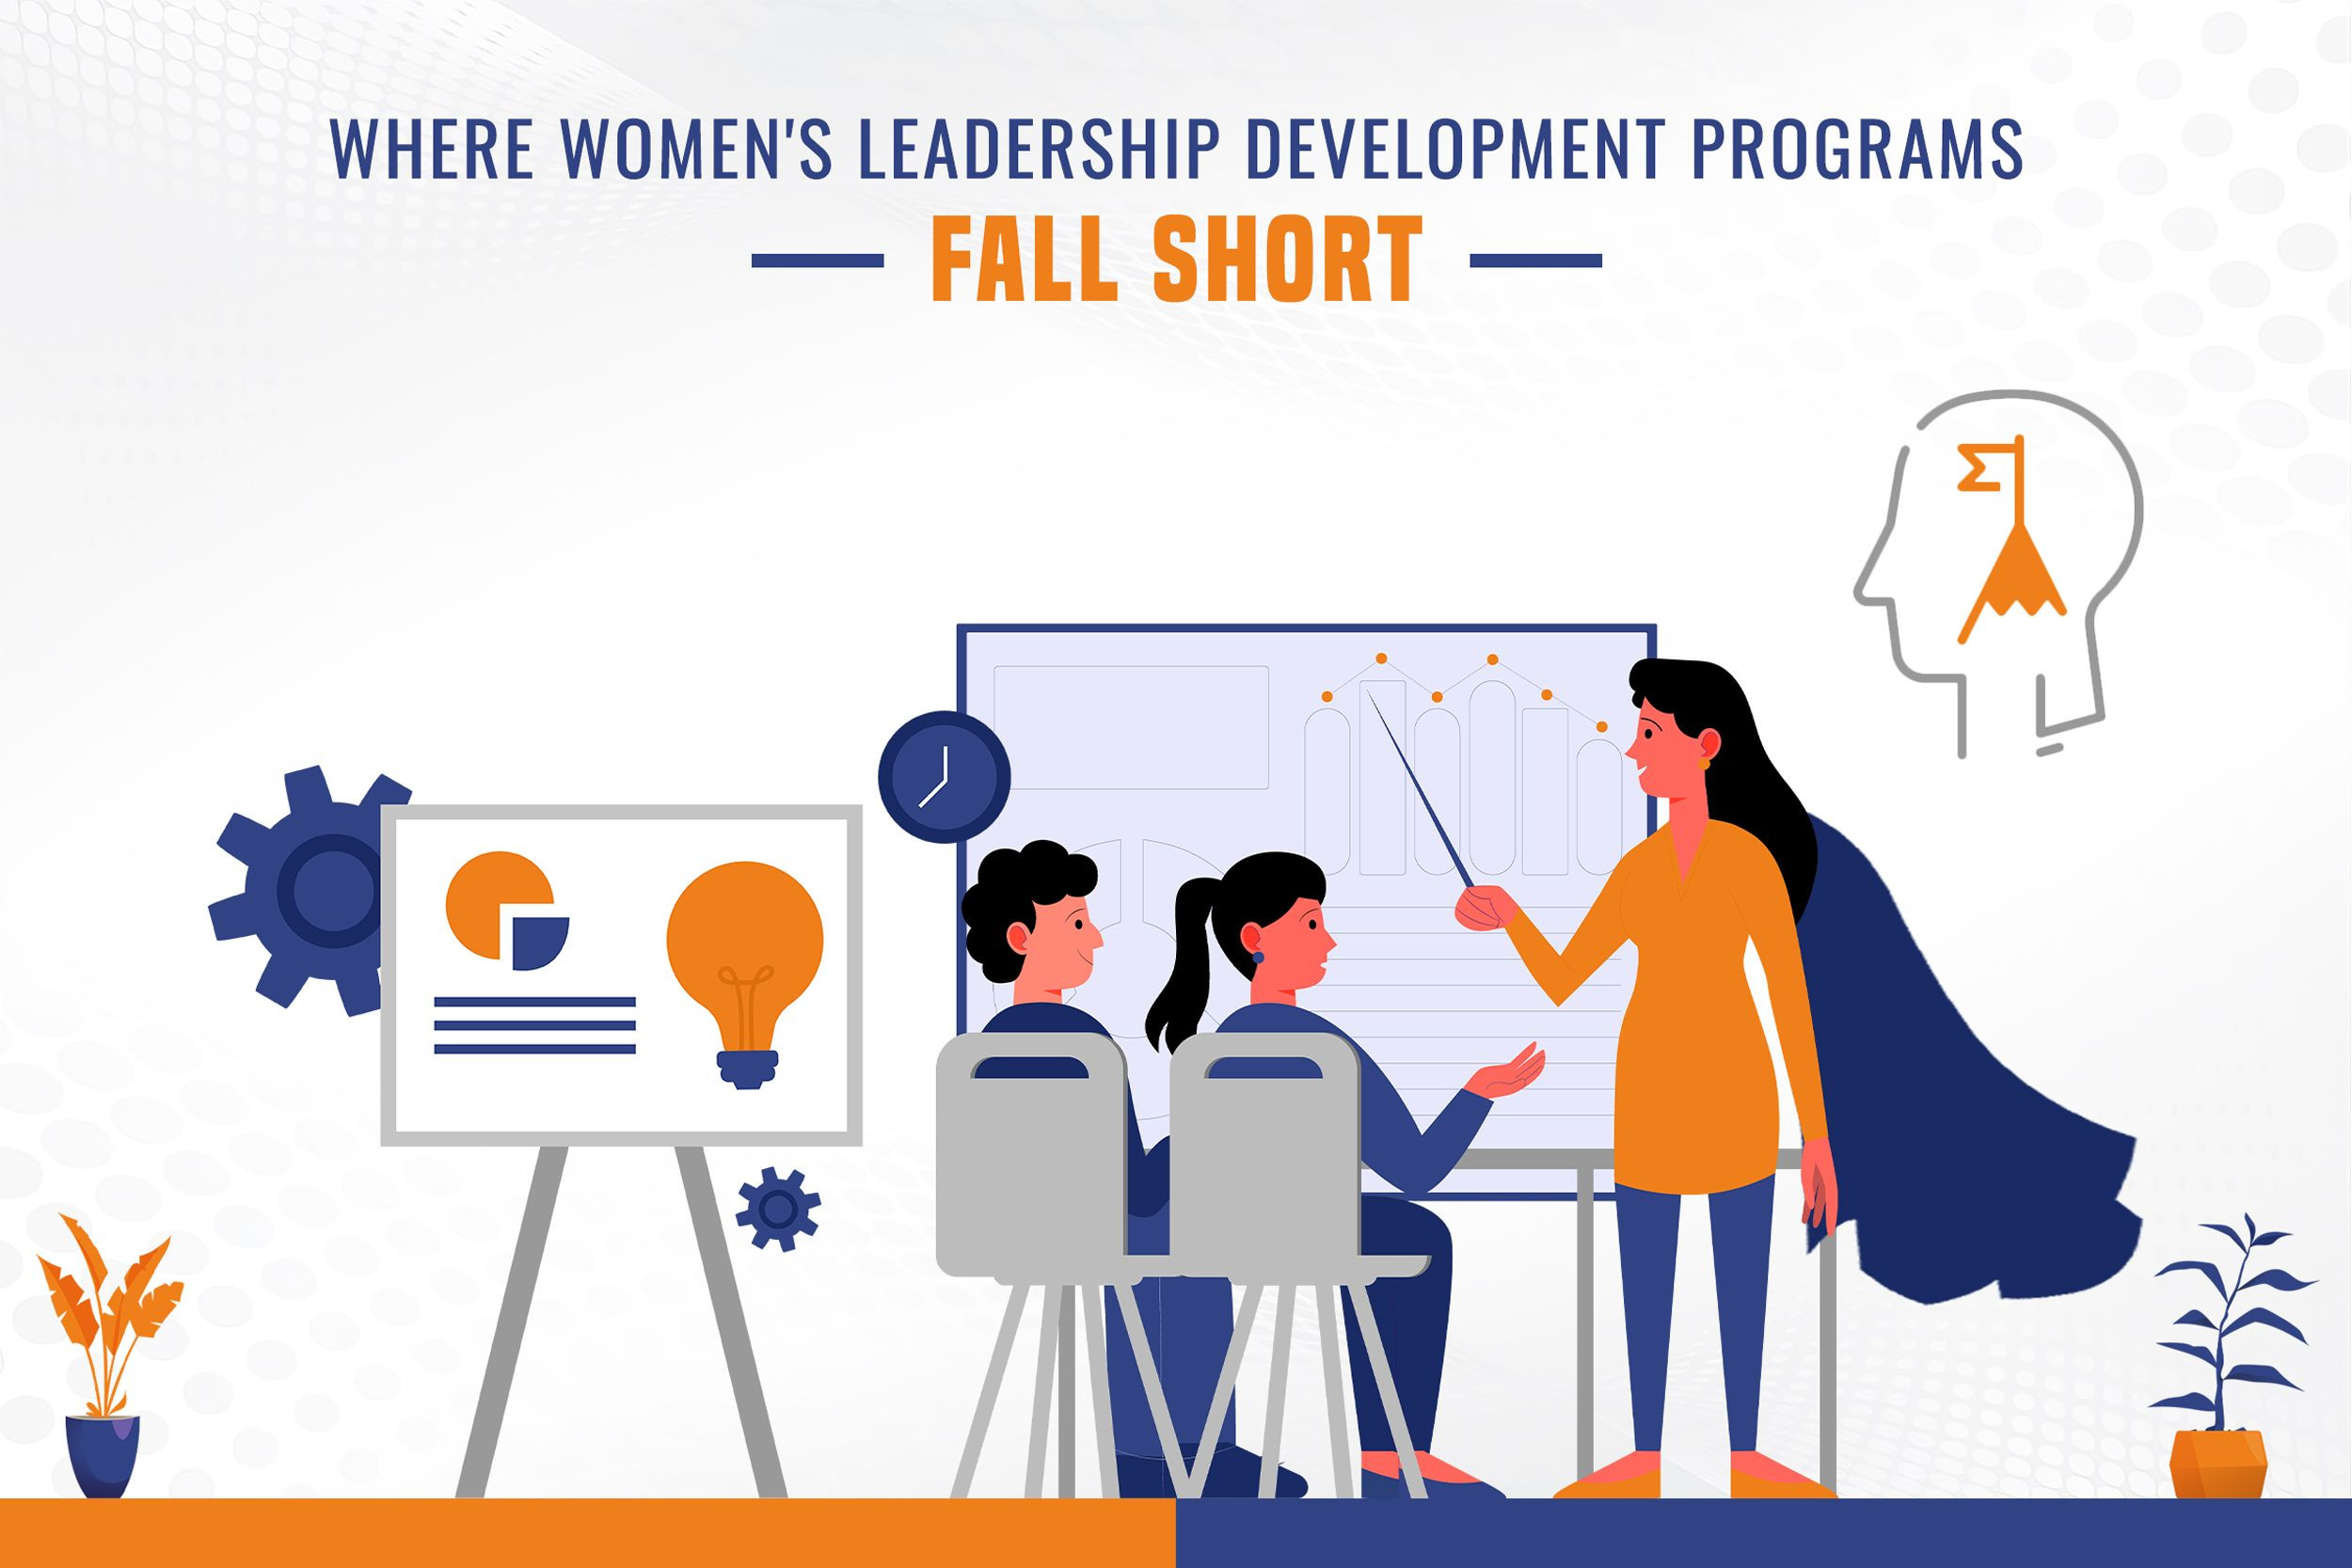 Closing the Gap: Women's Leadership Programs' Limitations & Fixes